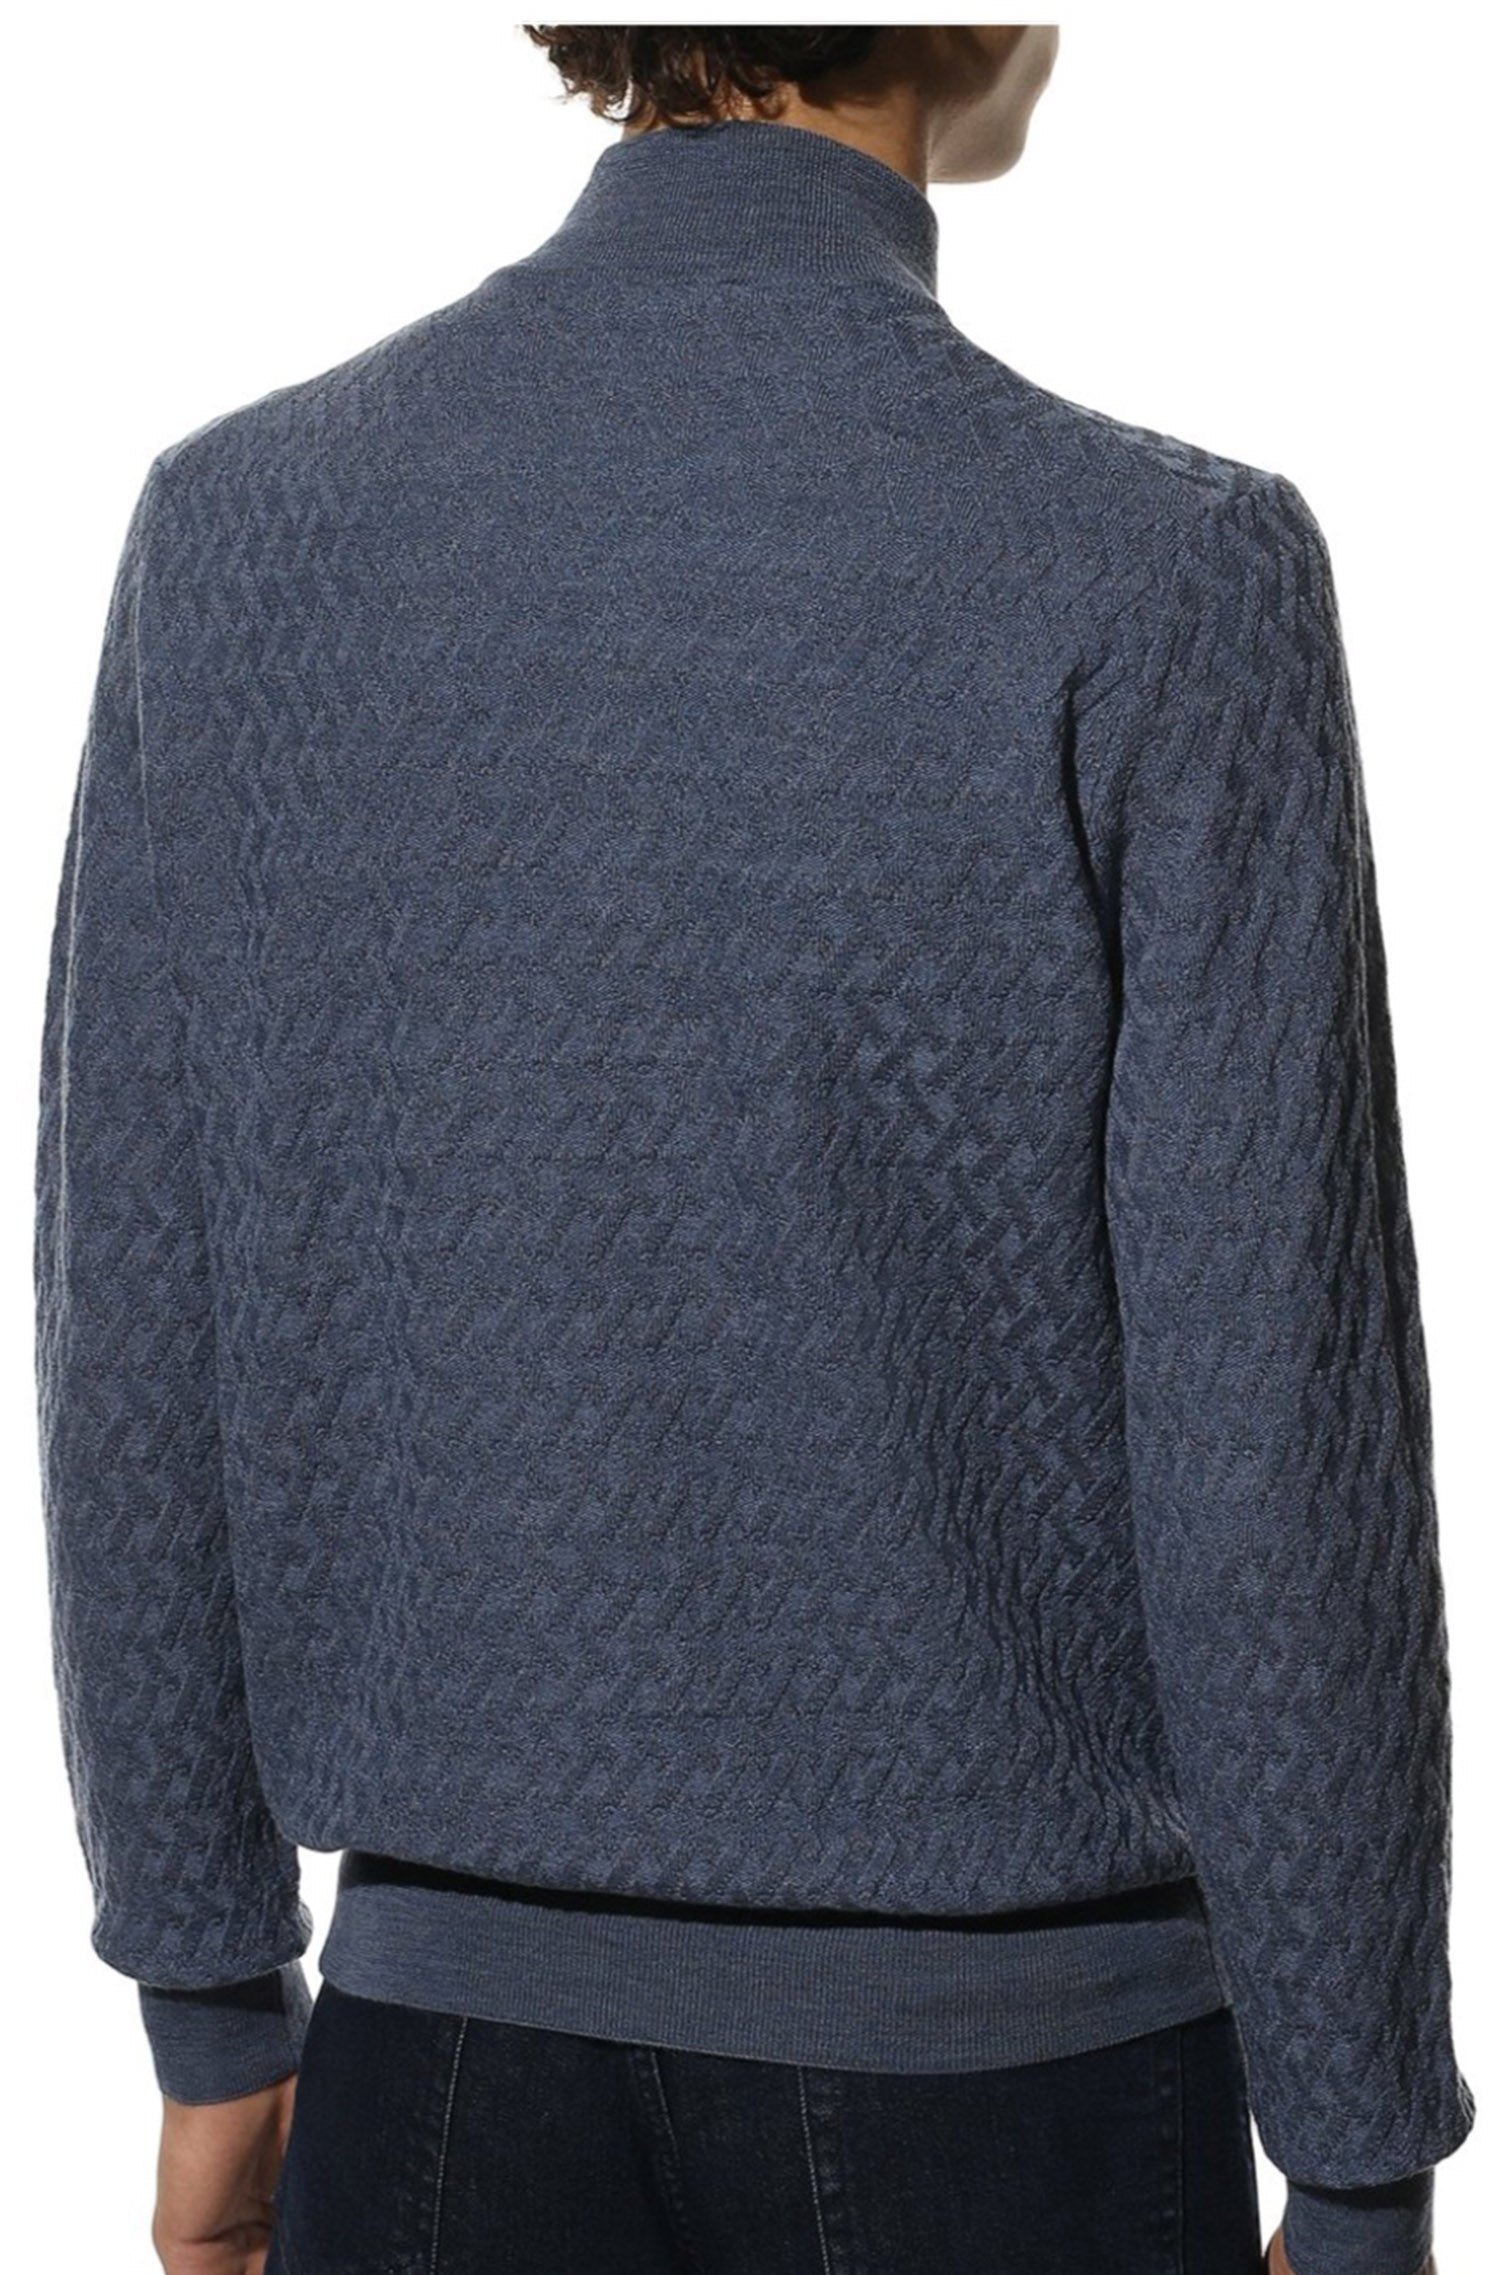 CANALI - Mid Blue Roll Neck Wool Knitwear with Geometric Knit Pattern C0020.K01670.430